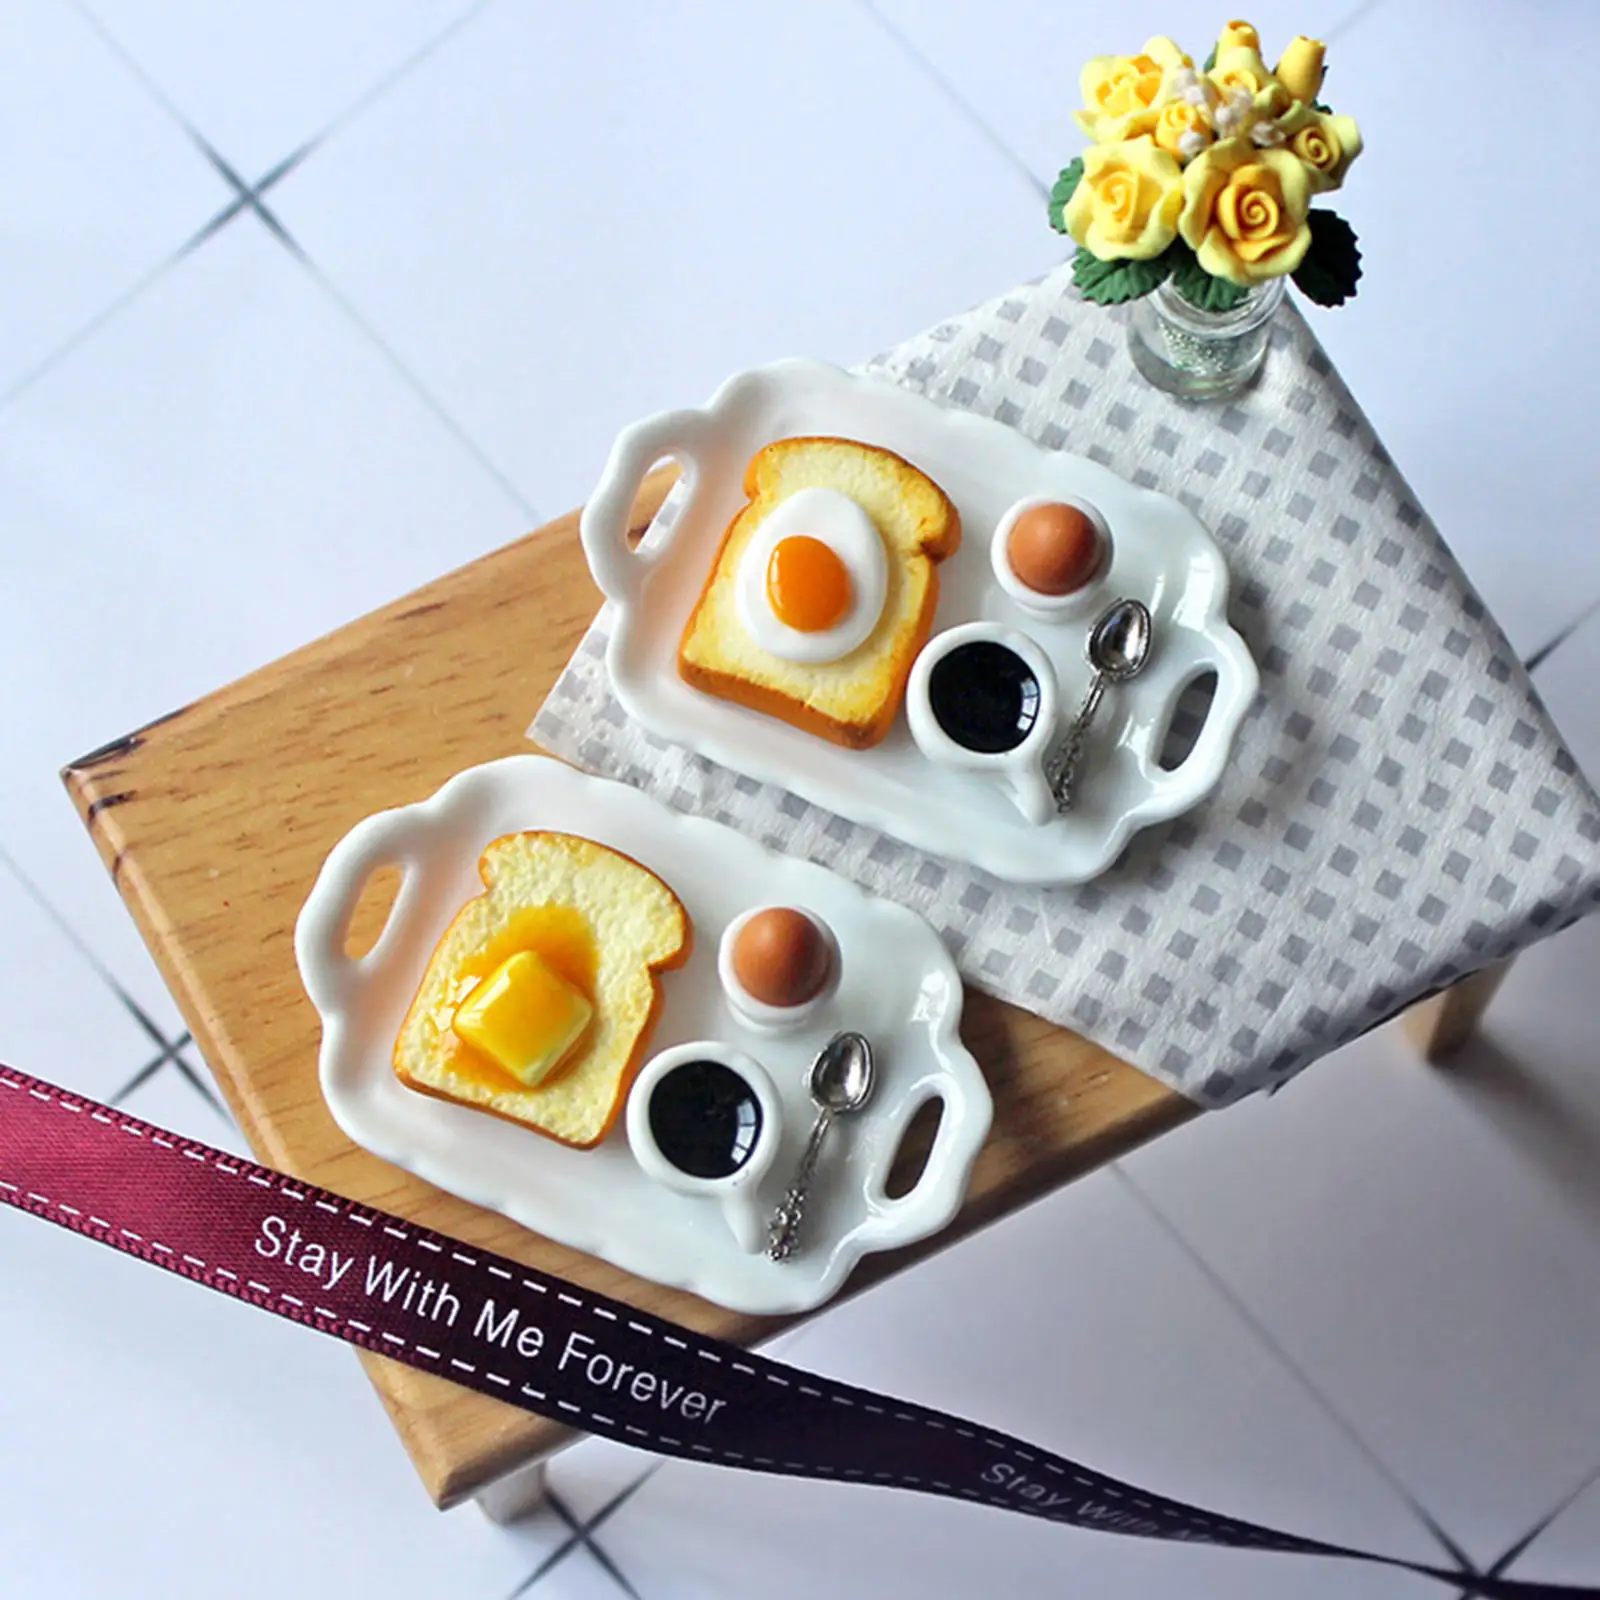 Breakfast Birthday Gifts Kitchen Food Ornament Dollhouse Decration Pretend Play Ceramic Toy for Children Boy